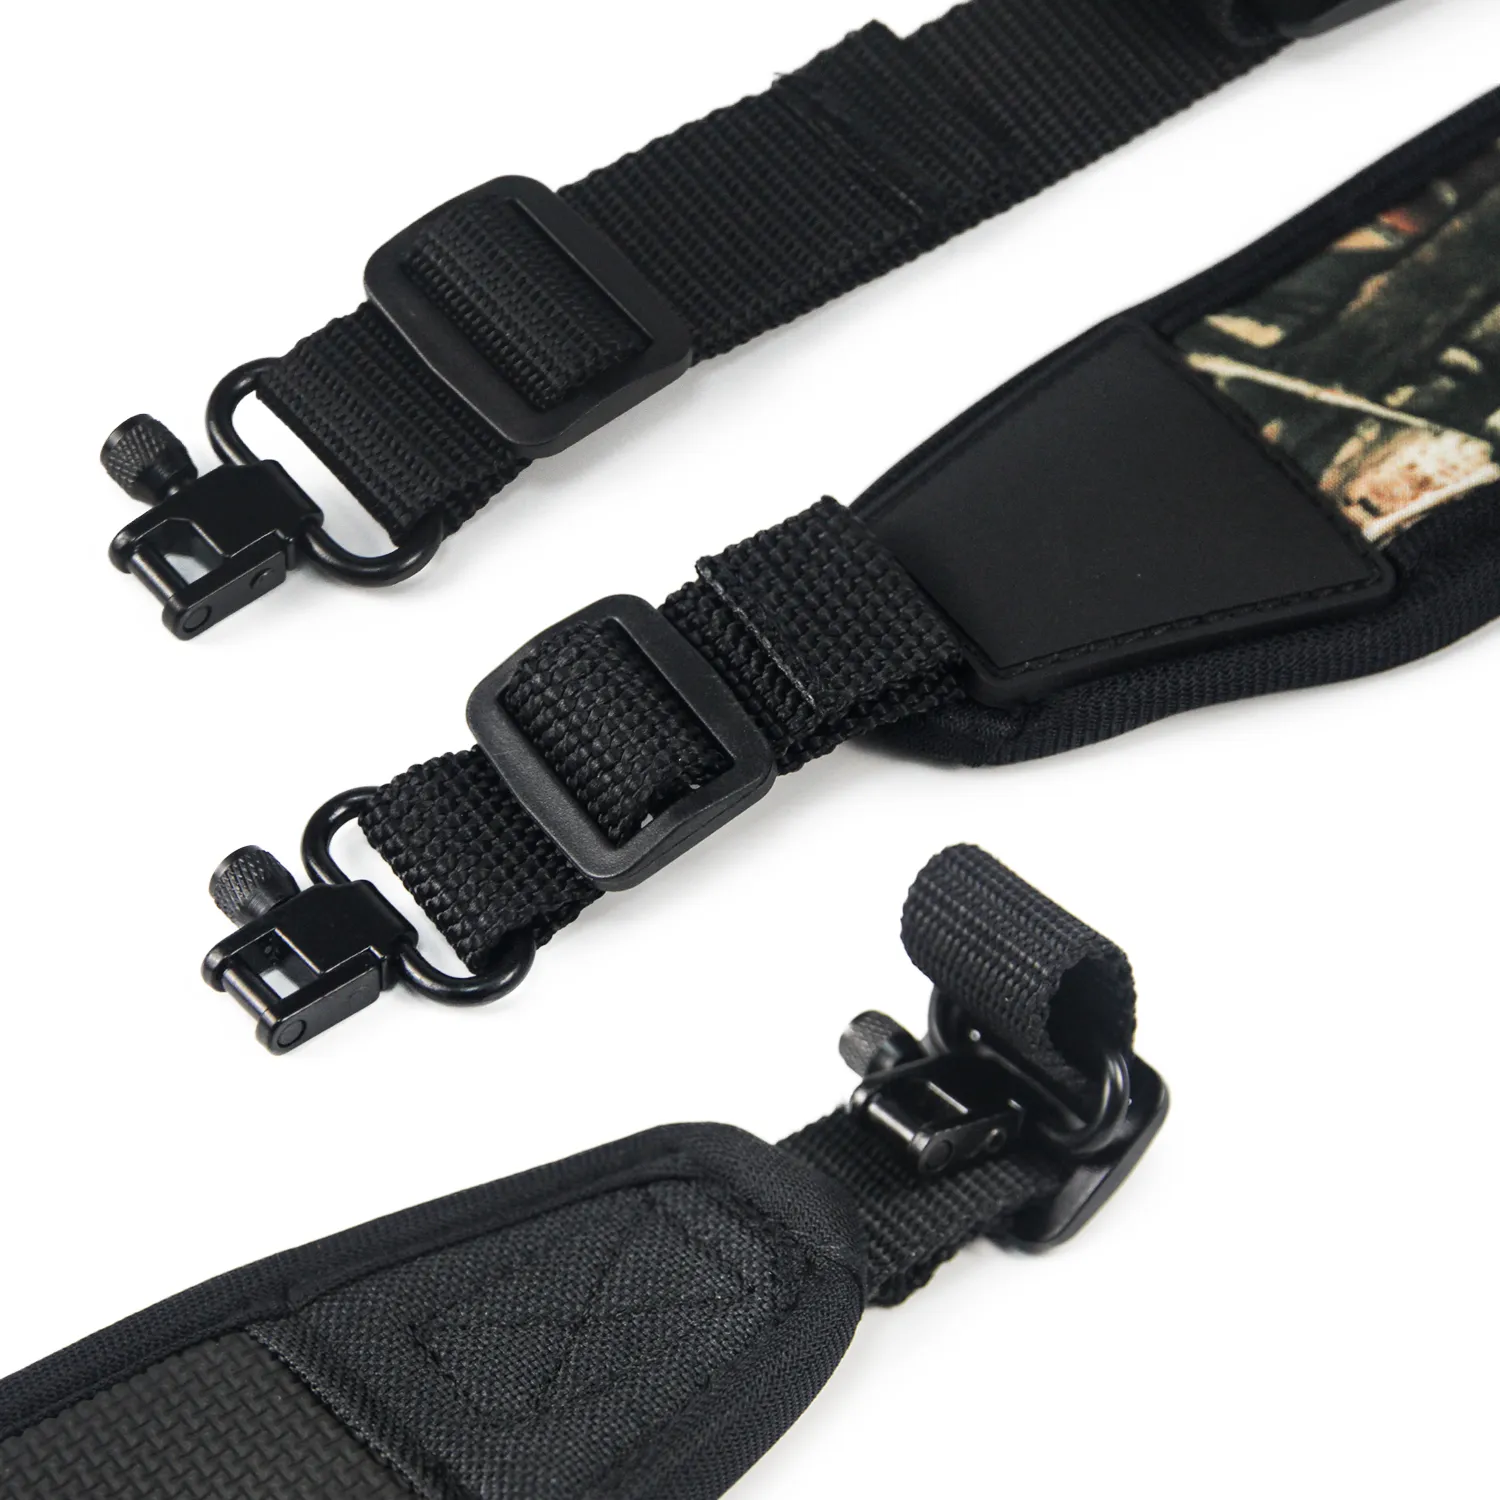 Rifle Sling with Mil-Spec Swivels Durable Shoulder Padding Gun Strap Metal Hardware Length Adjuster